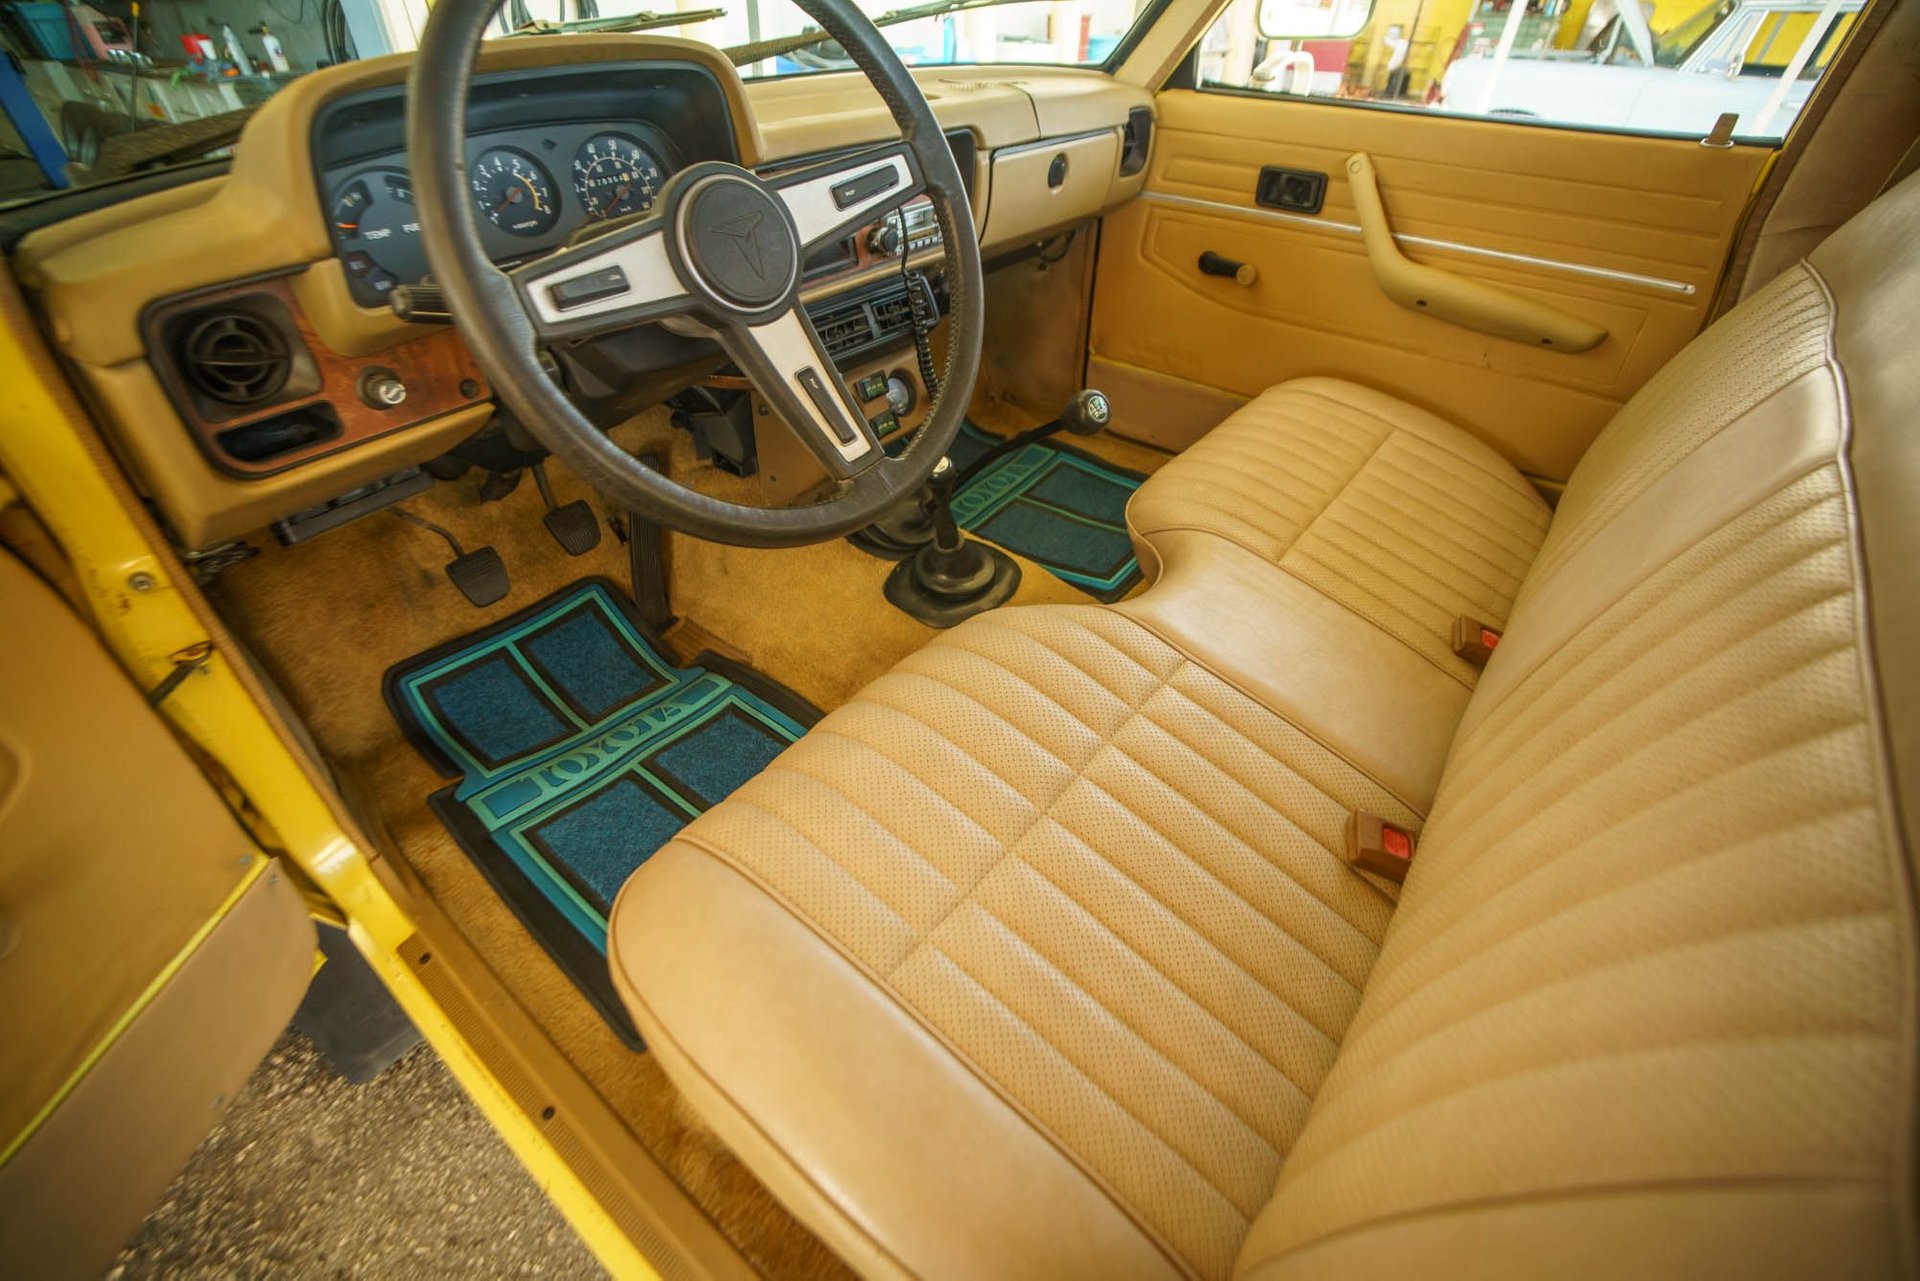 1979 toyota hilux sr5 4x4 short bed pickup